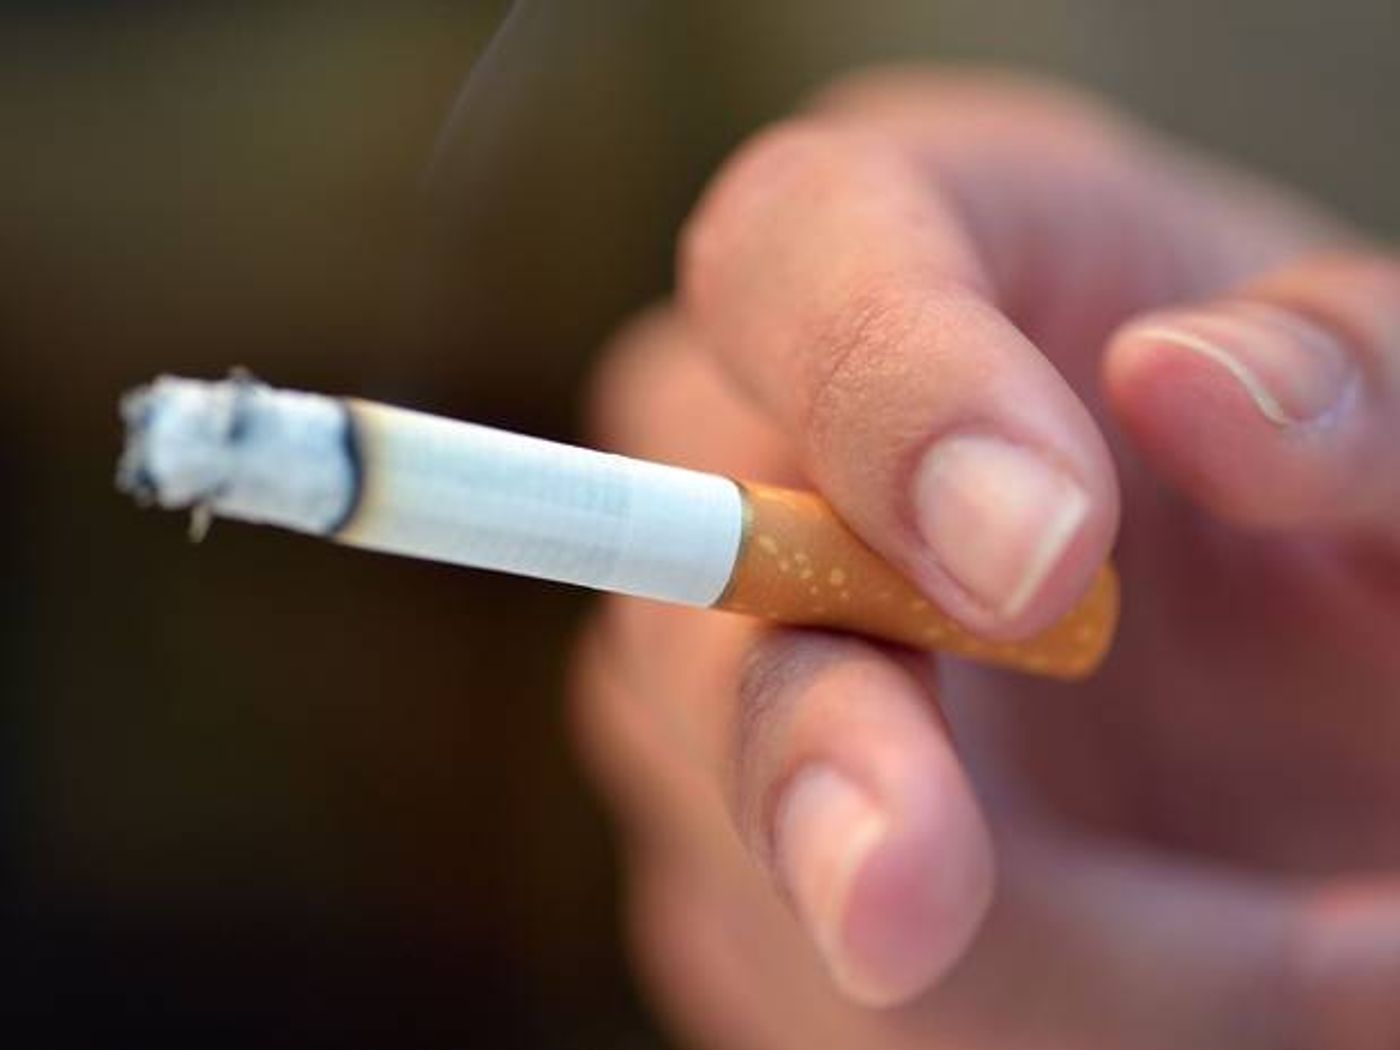 Tobacco-related illness kills nearly 6 million annually.